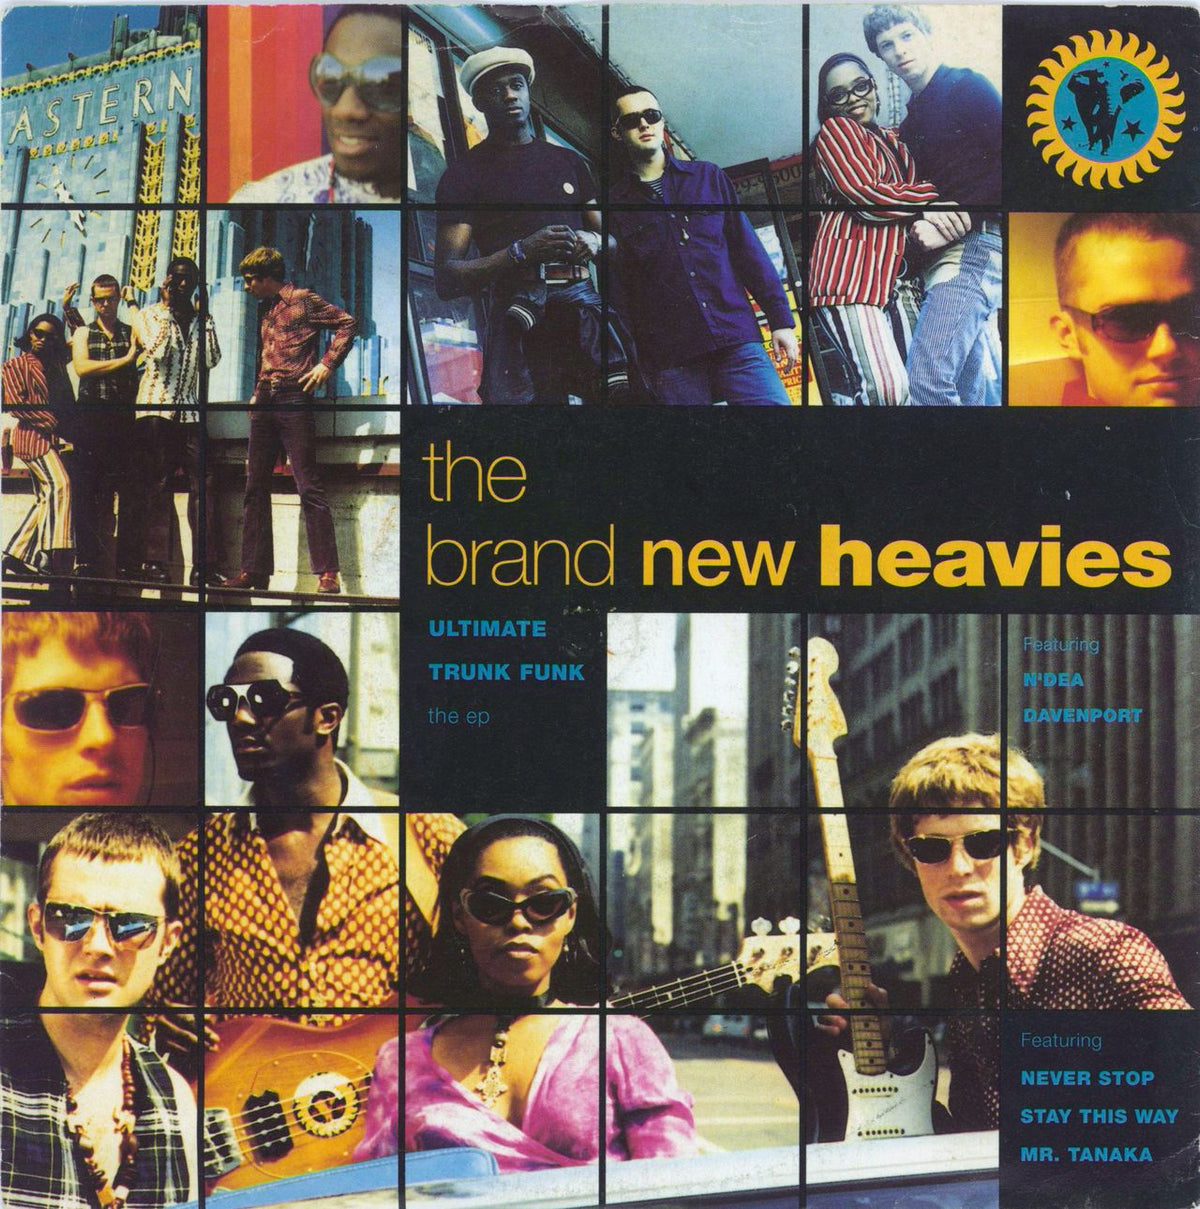 The Brand New Heavies Ultimate Trunk Funk EP UK 7 vinyl — RareVinyl.com